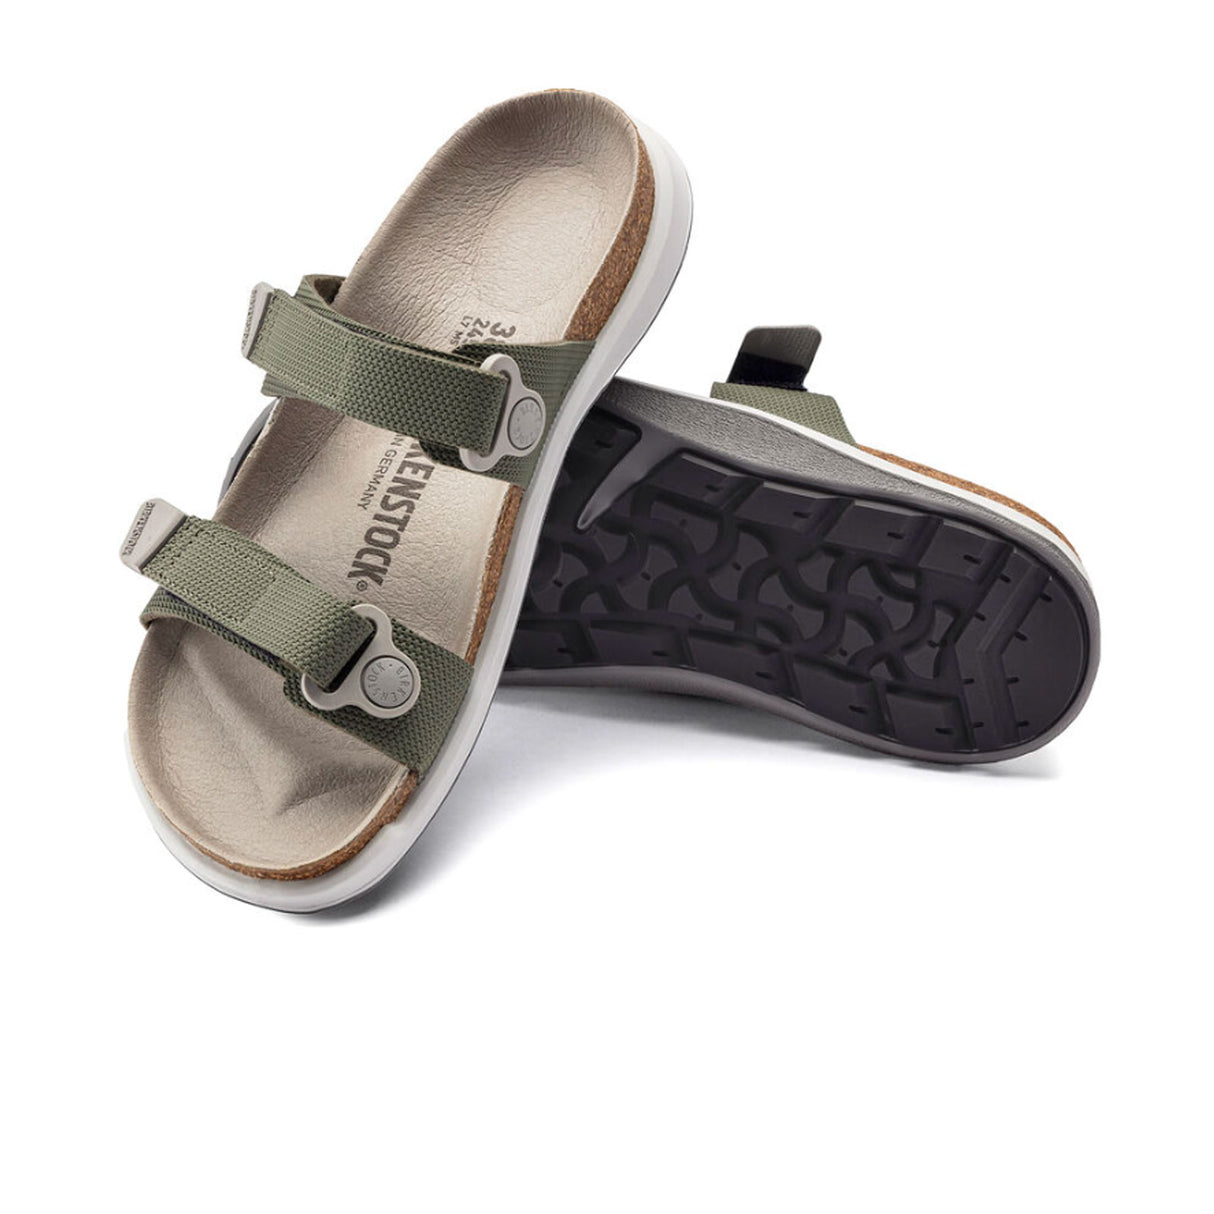 Birkenstock Sahara Birko-Flor Narrow Slide Sandal (Women) - Futura Khaki Sandals - Slide - The Heel Shoe Fitters